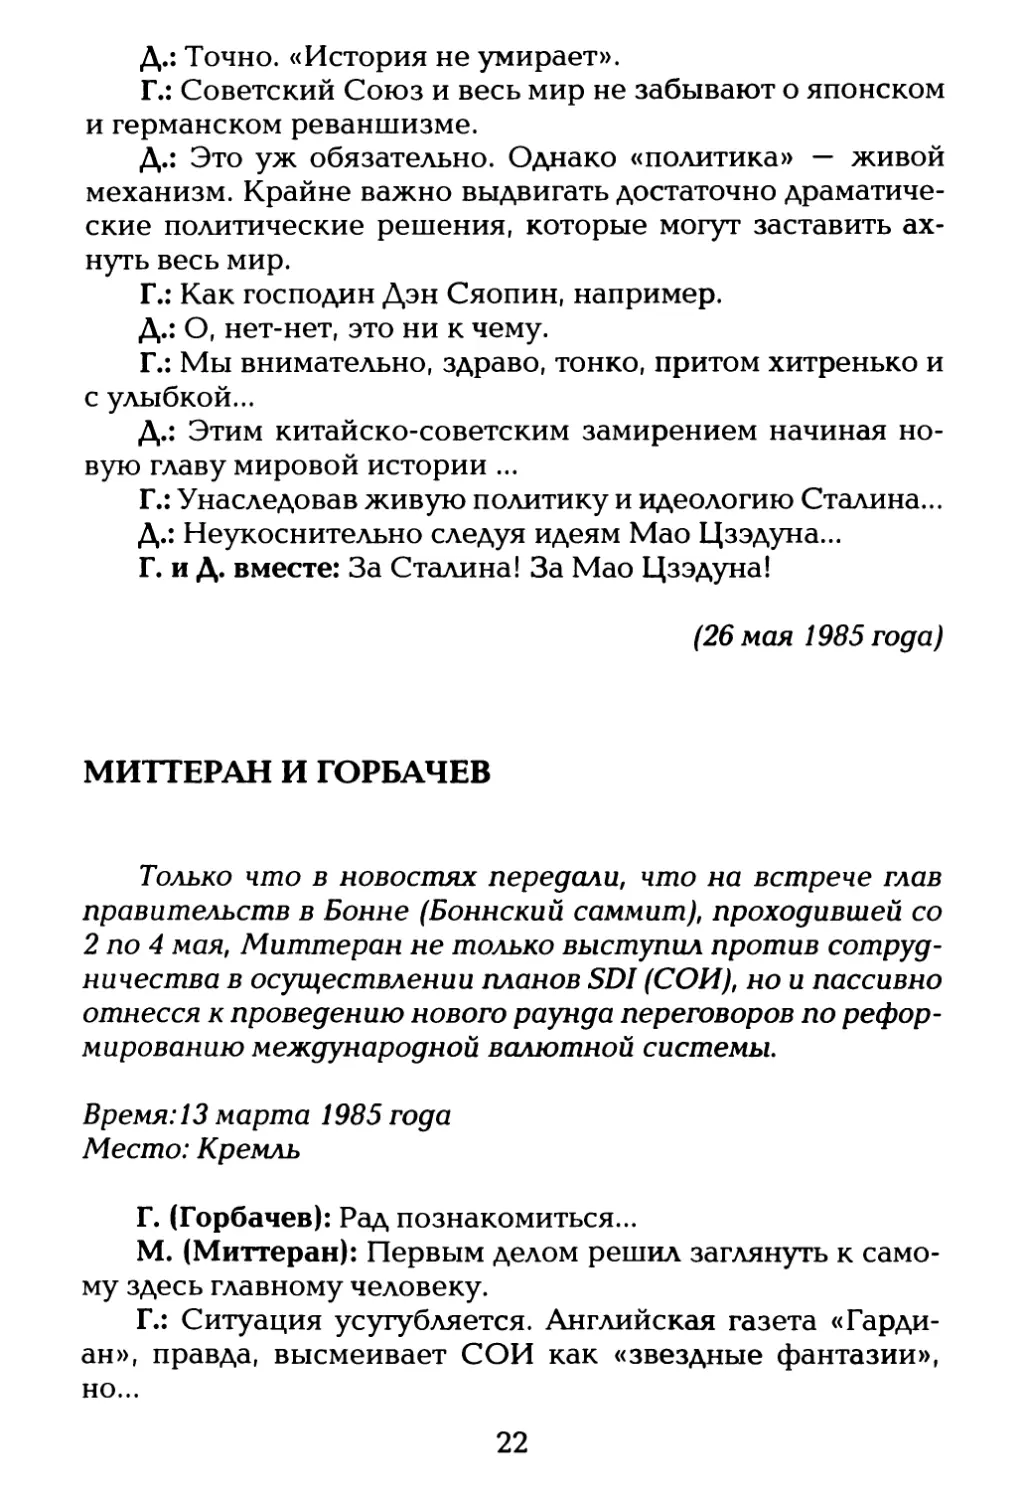 Миттеран и Горбачев